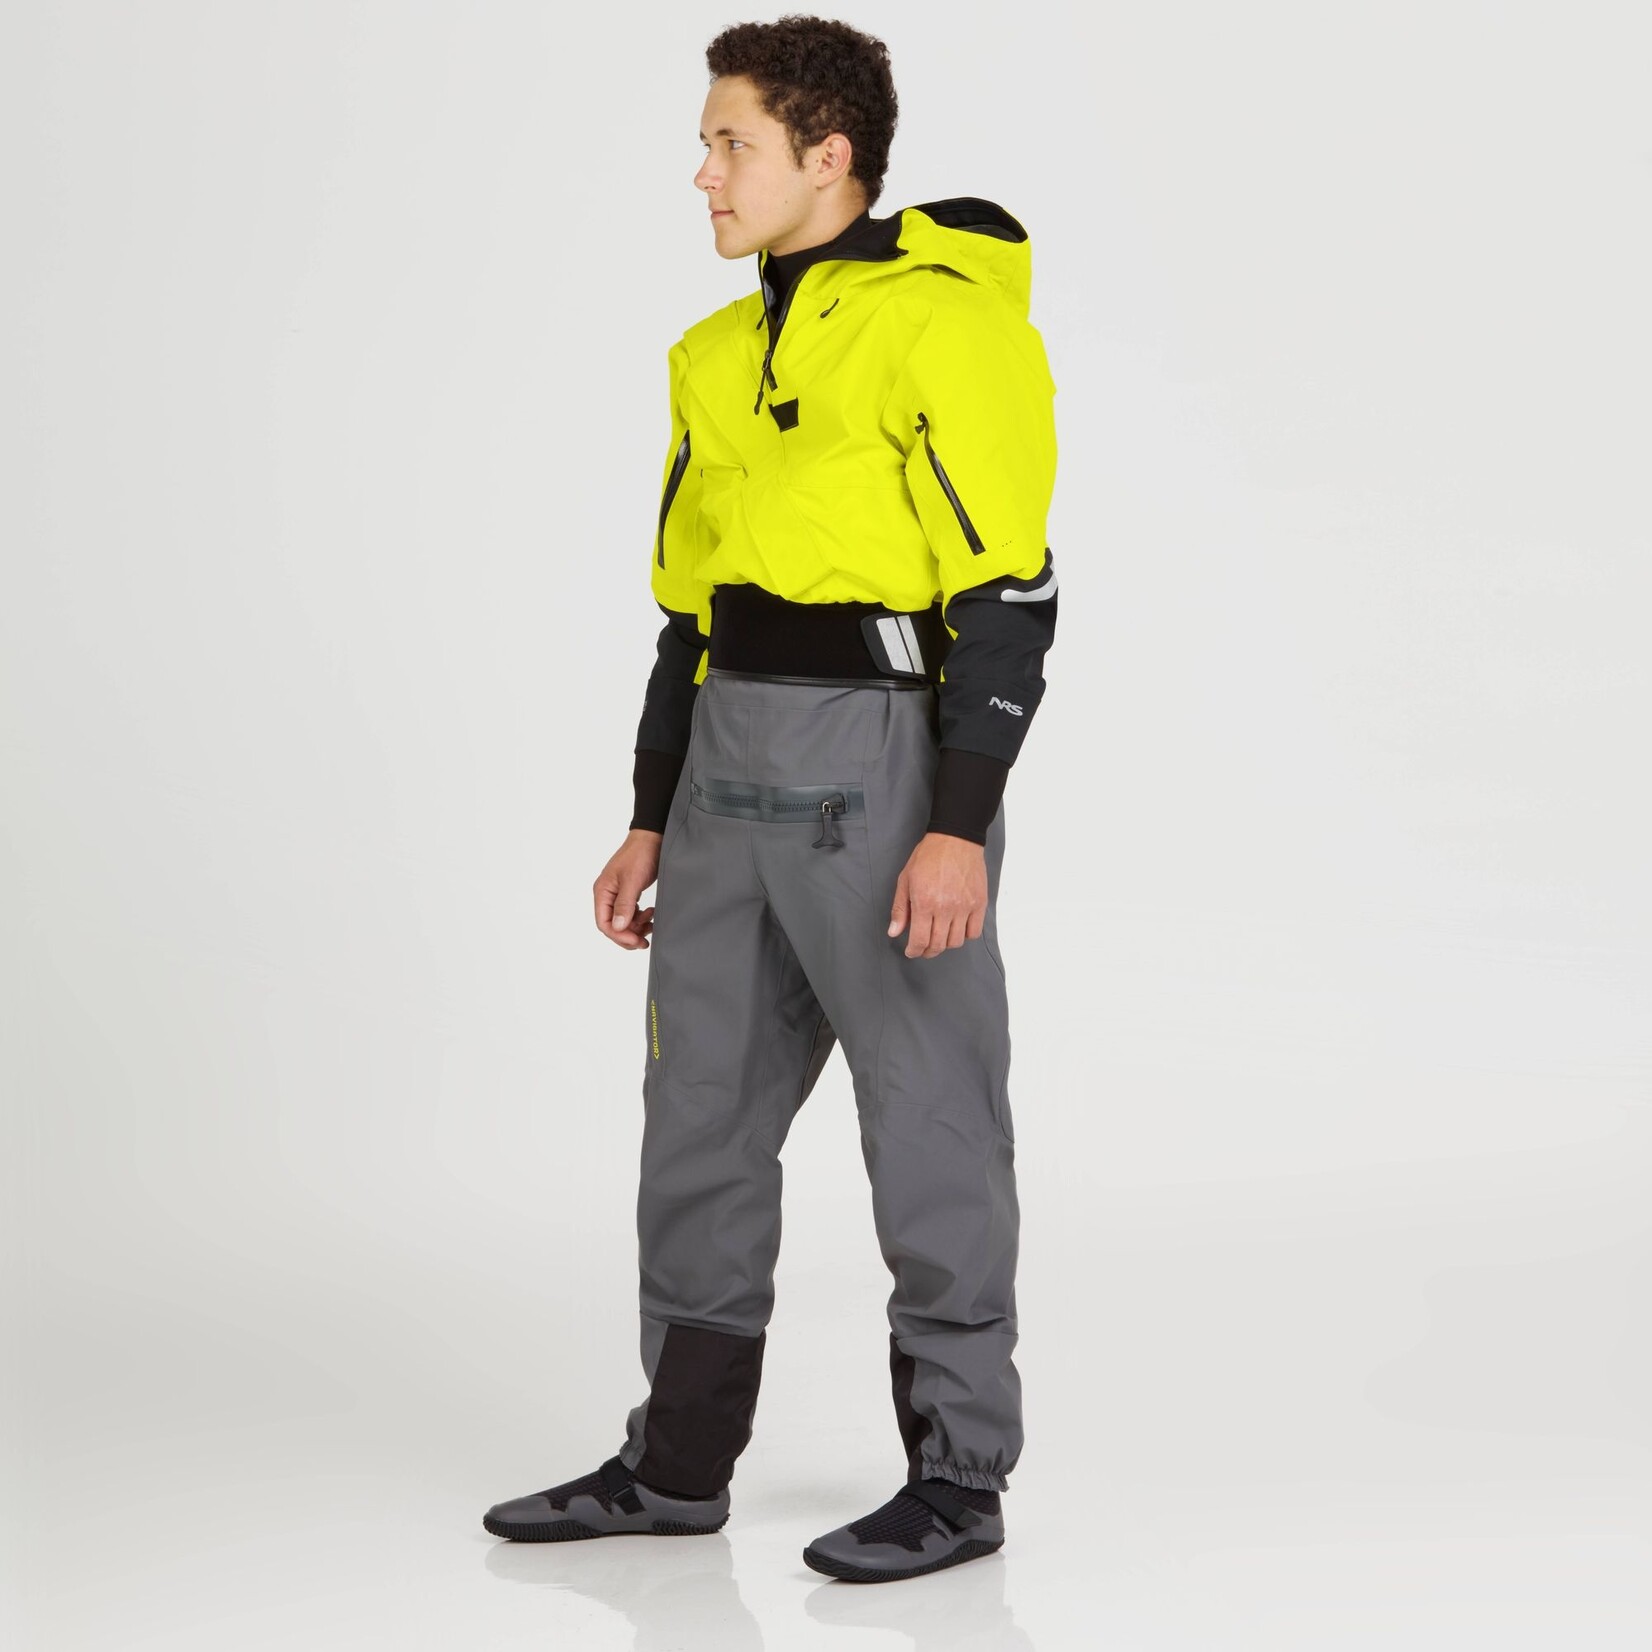 NRS - Men's Navigator GORE-TEX Pro Semi-Dry Suit